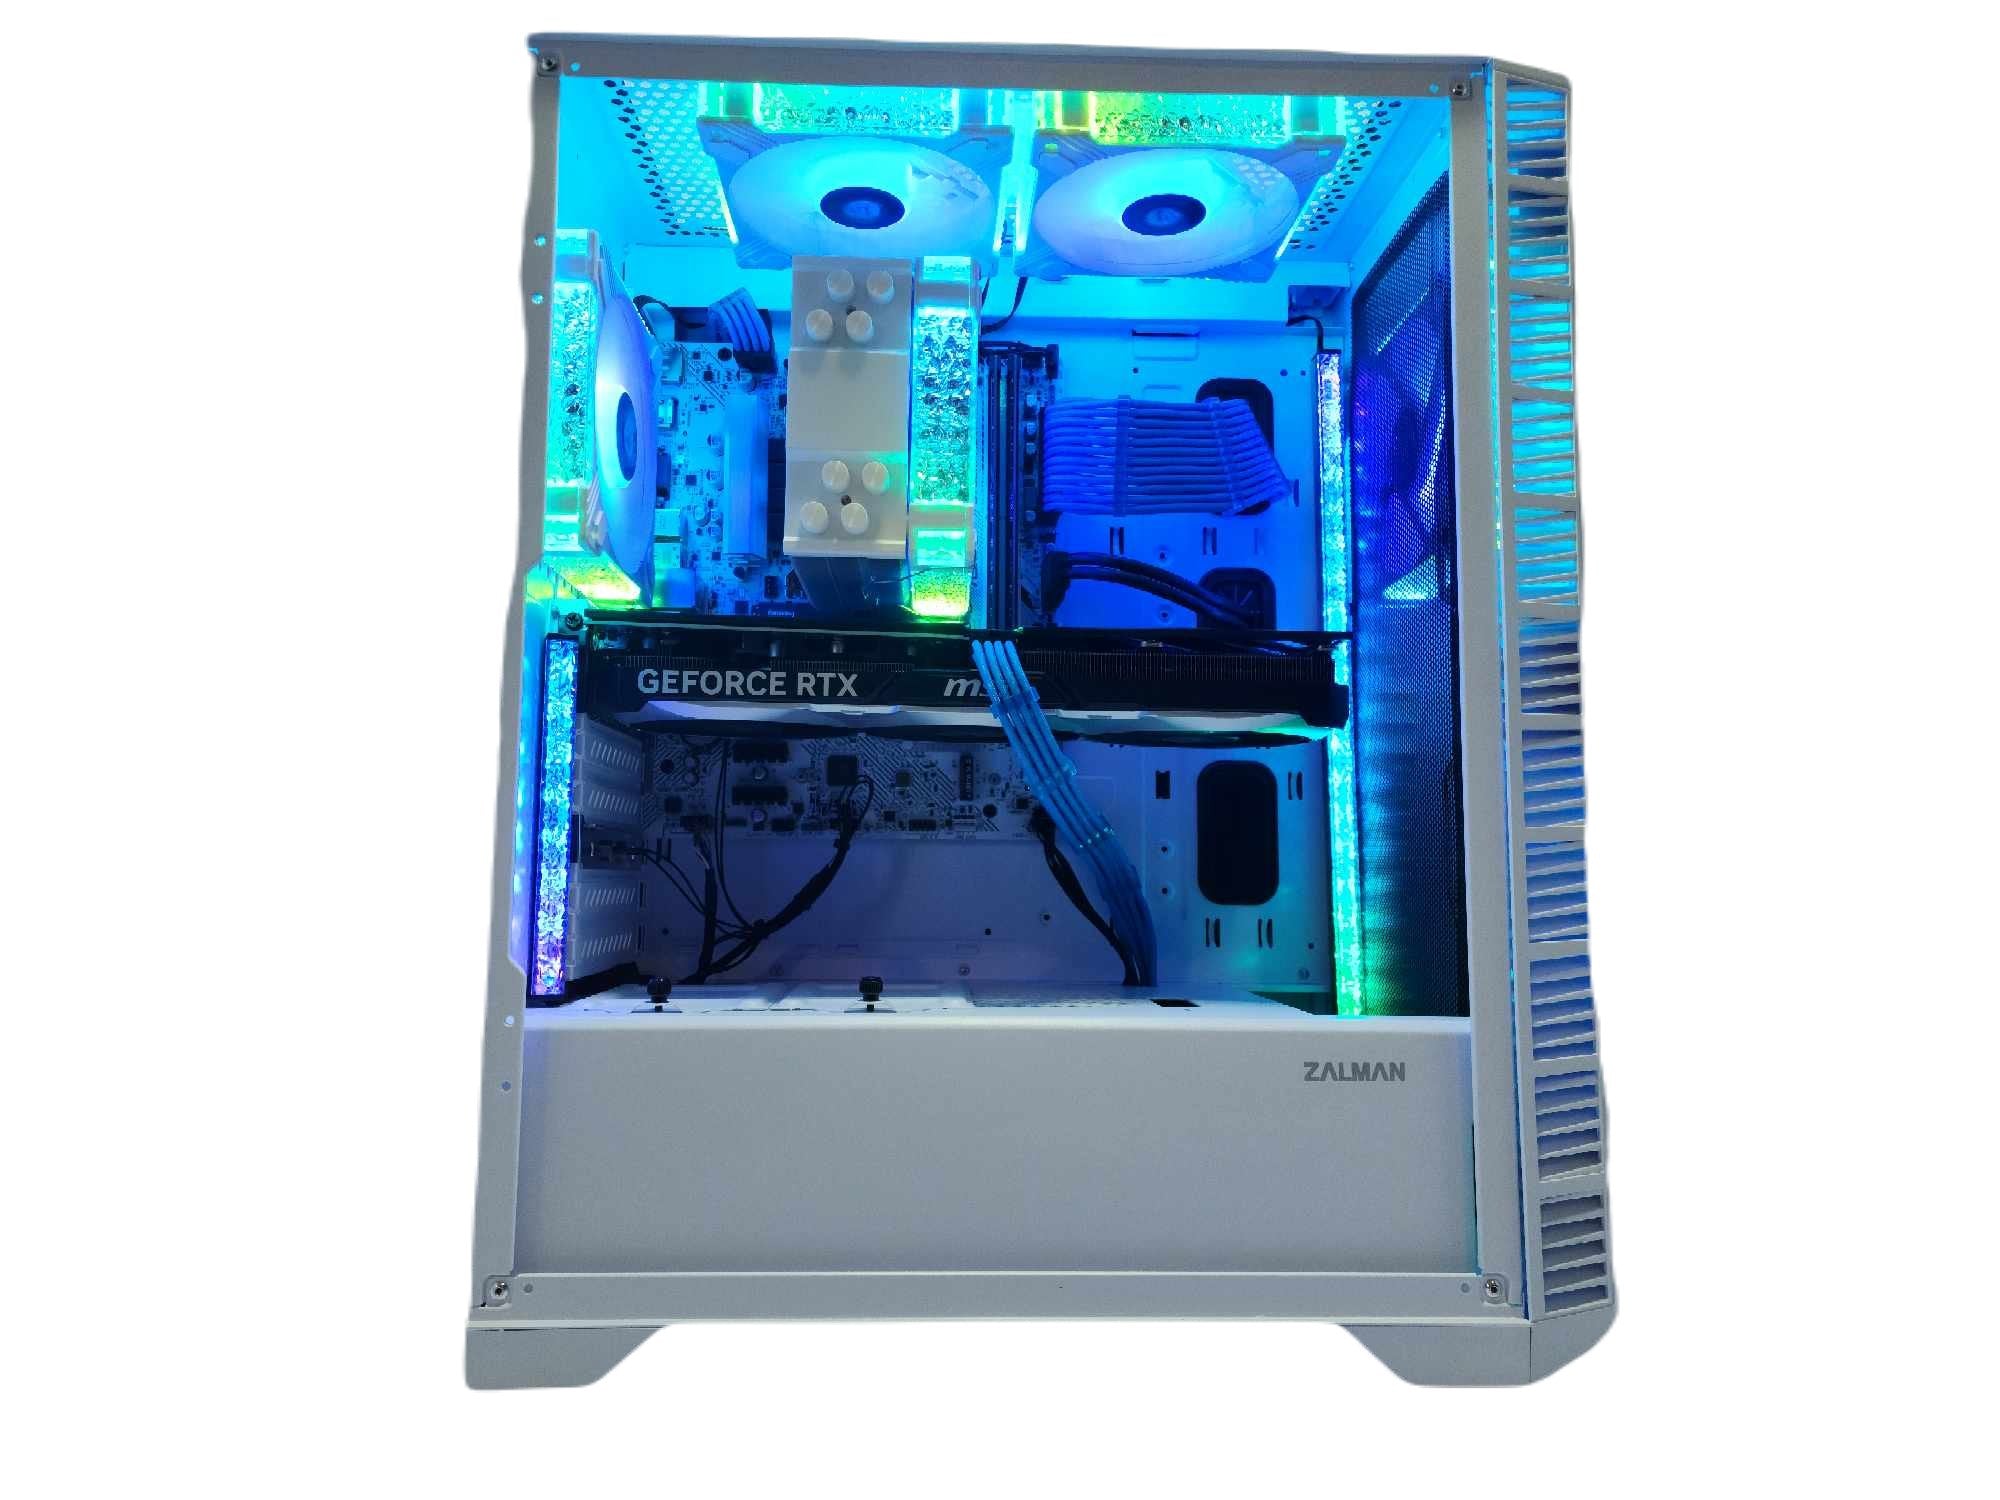 Iceworm Core XII Gaming PC Intel i3 NVIDIA RTX 4060 2TB SSD 32GB DDR5 White RGB B760 - Geek Tech